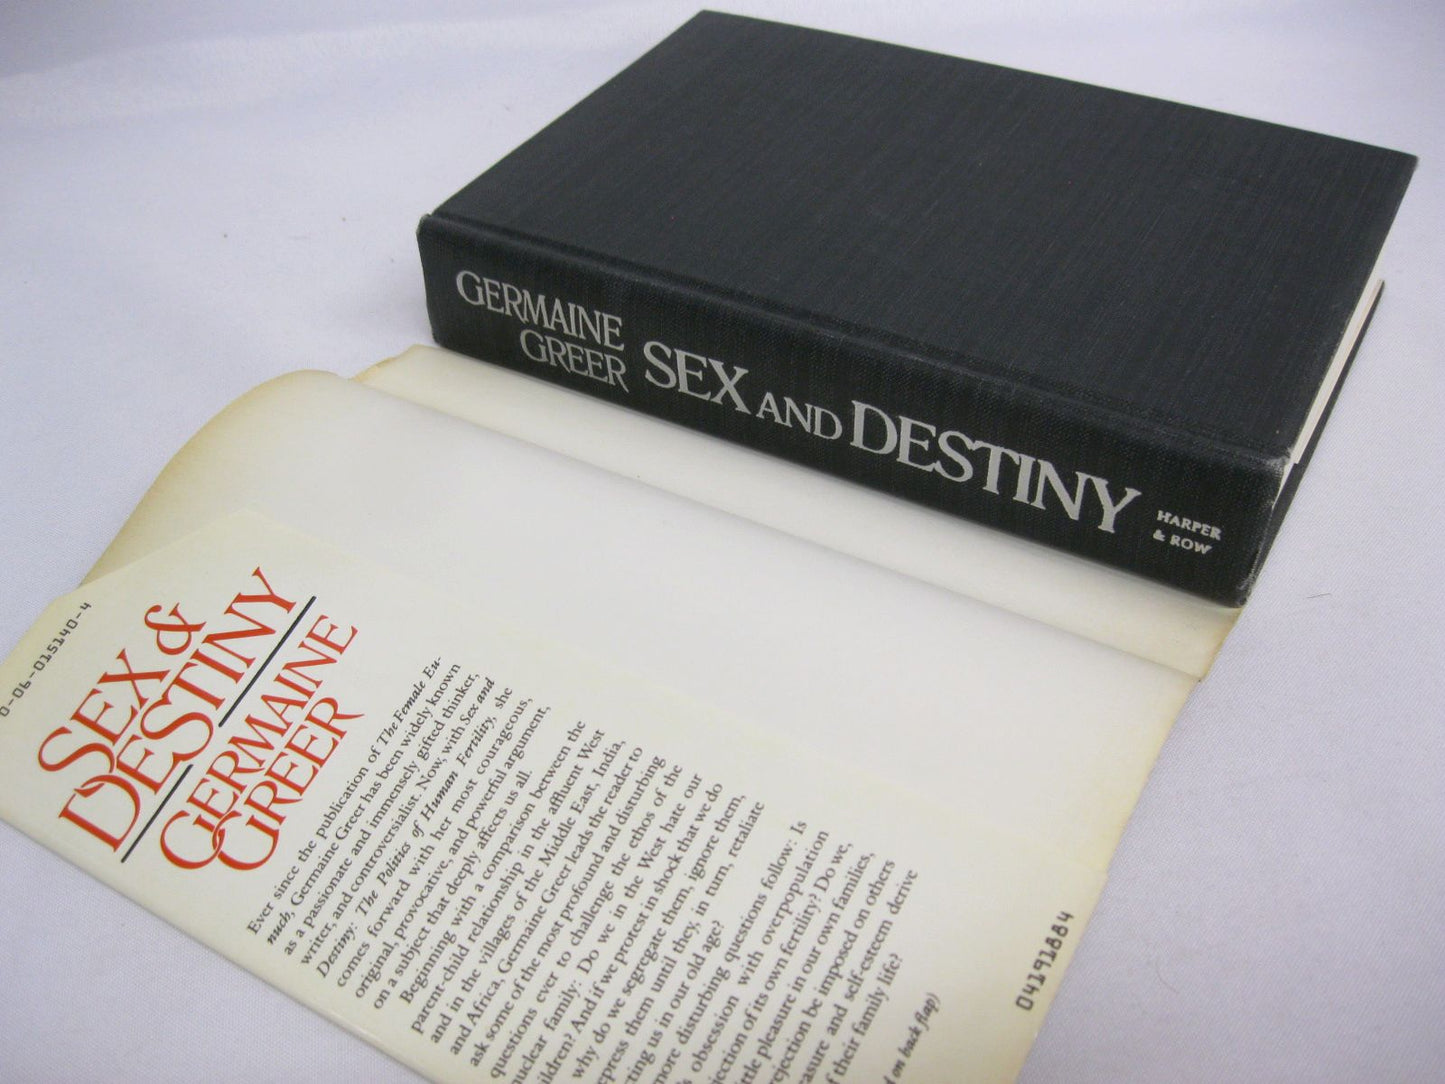 Sex & Destiny by Germaine Greer